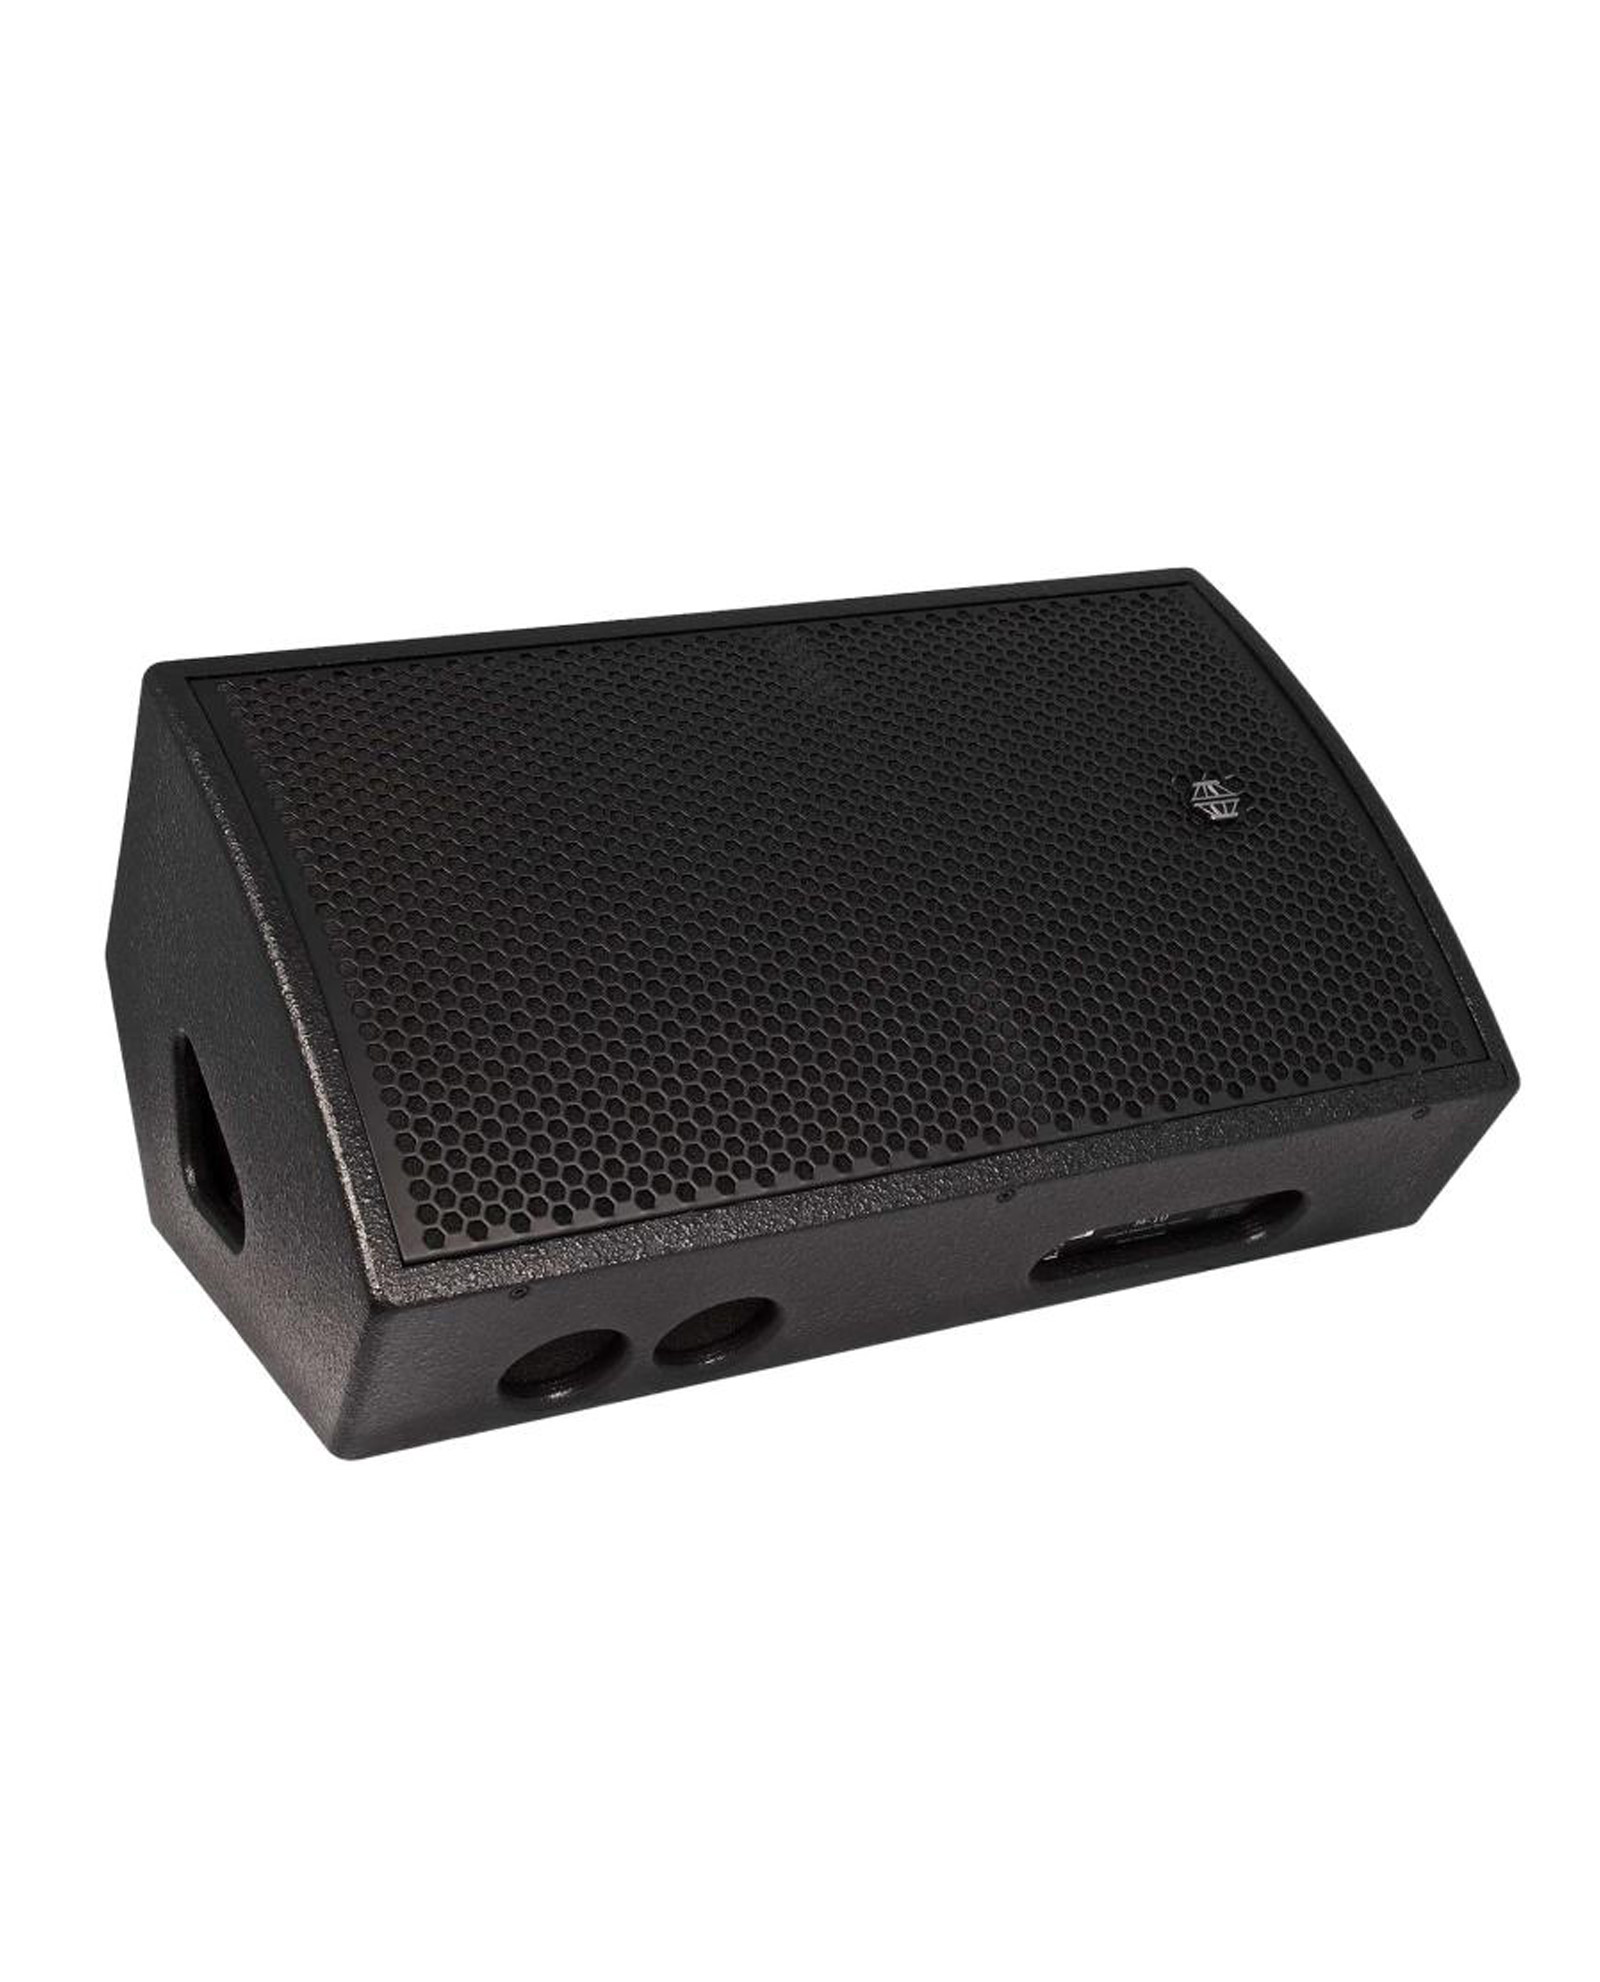 EM Acoustics M-10 Speaker